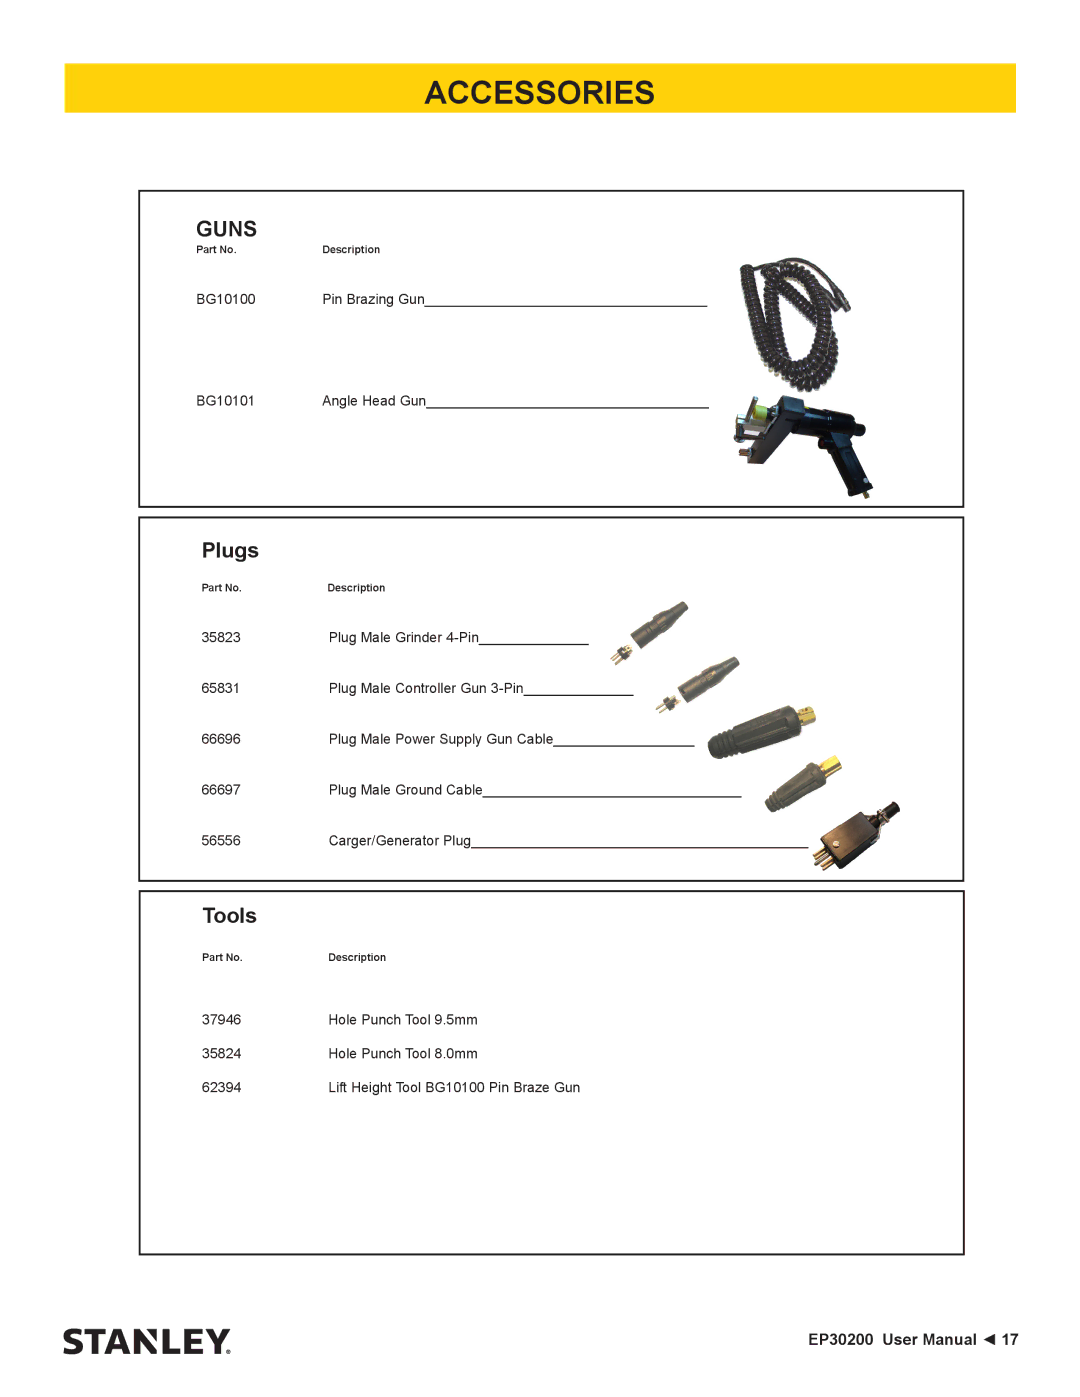 Stanley Black & Decker EP30200 user manual Guns, Plugs, Tools 